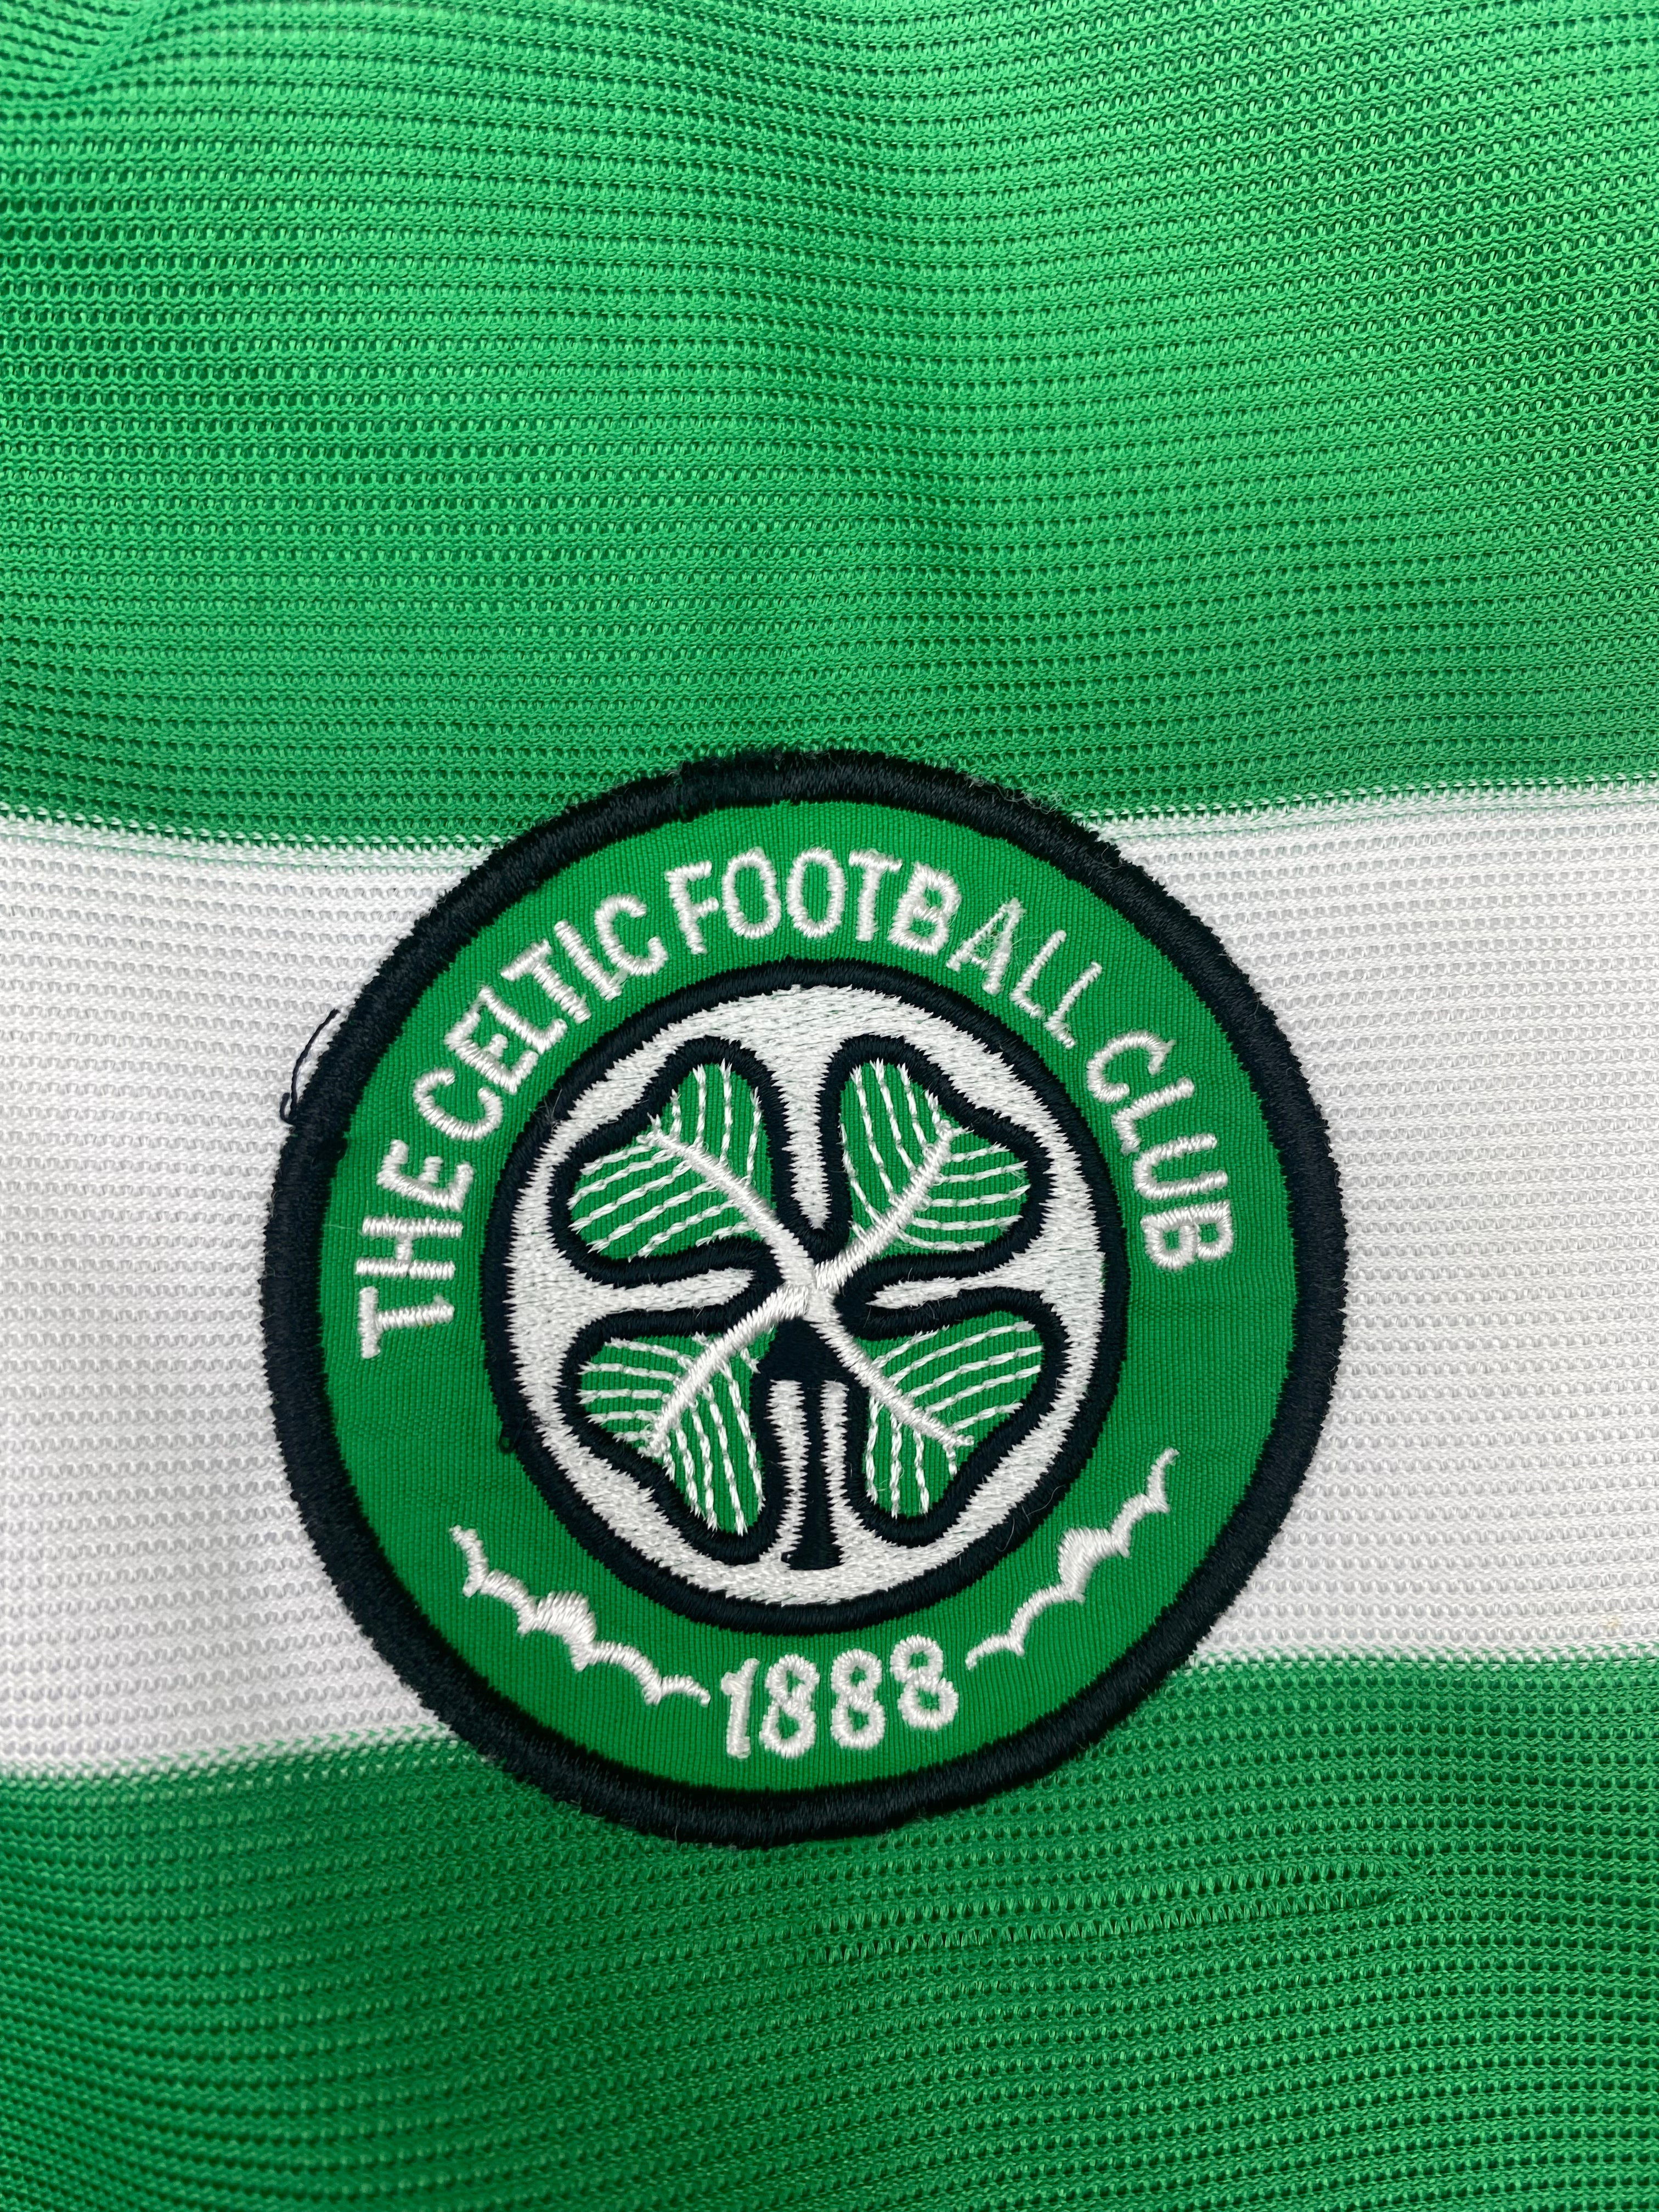 2001-03 Celtic Home Shirt - 5/10 - (XL)